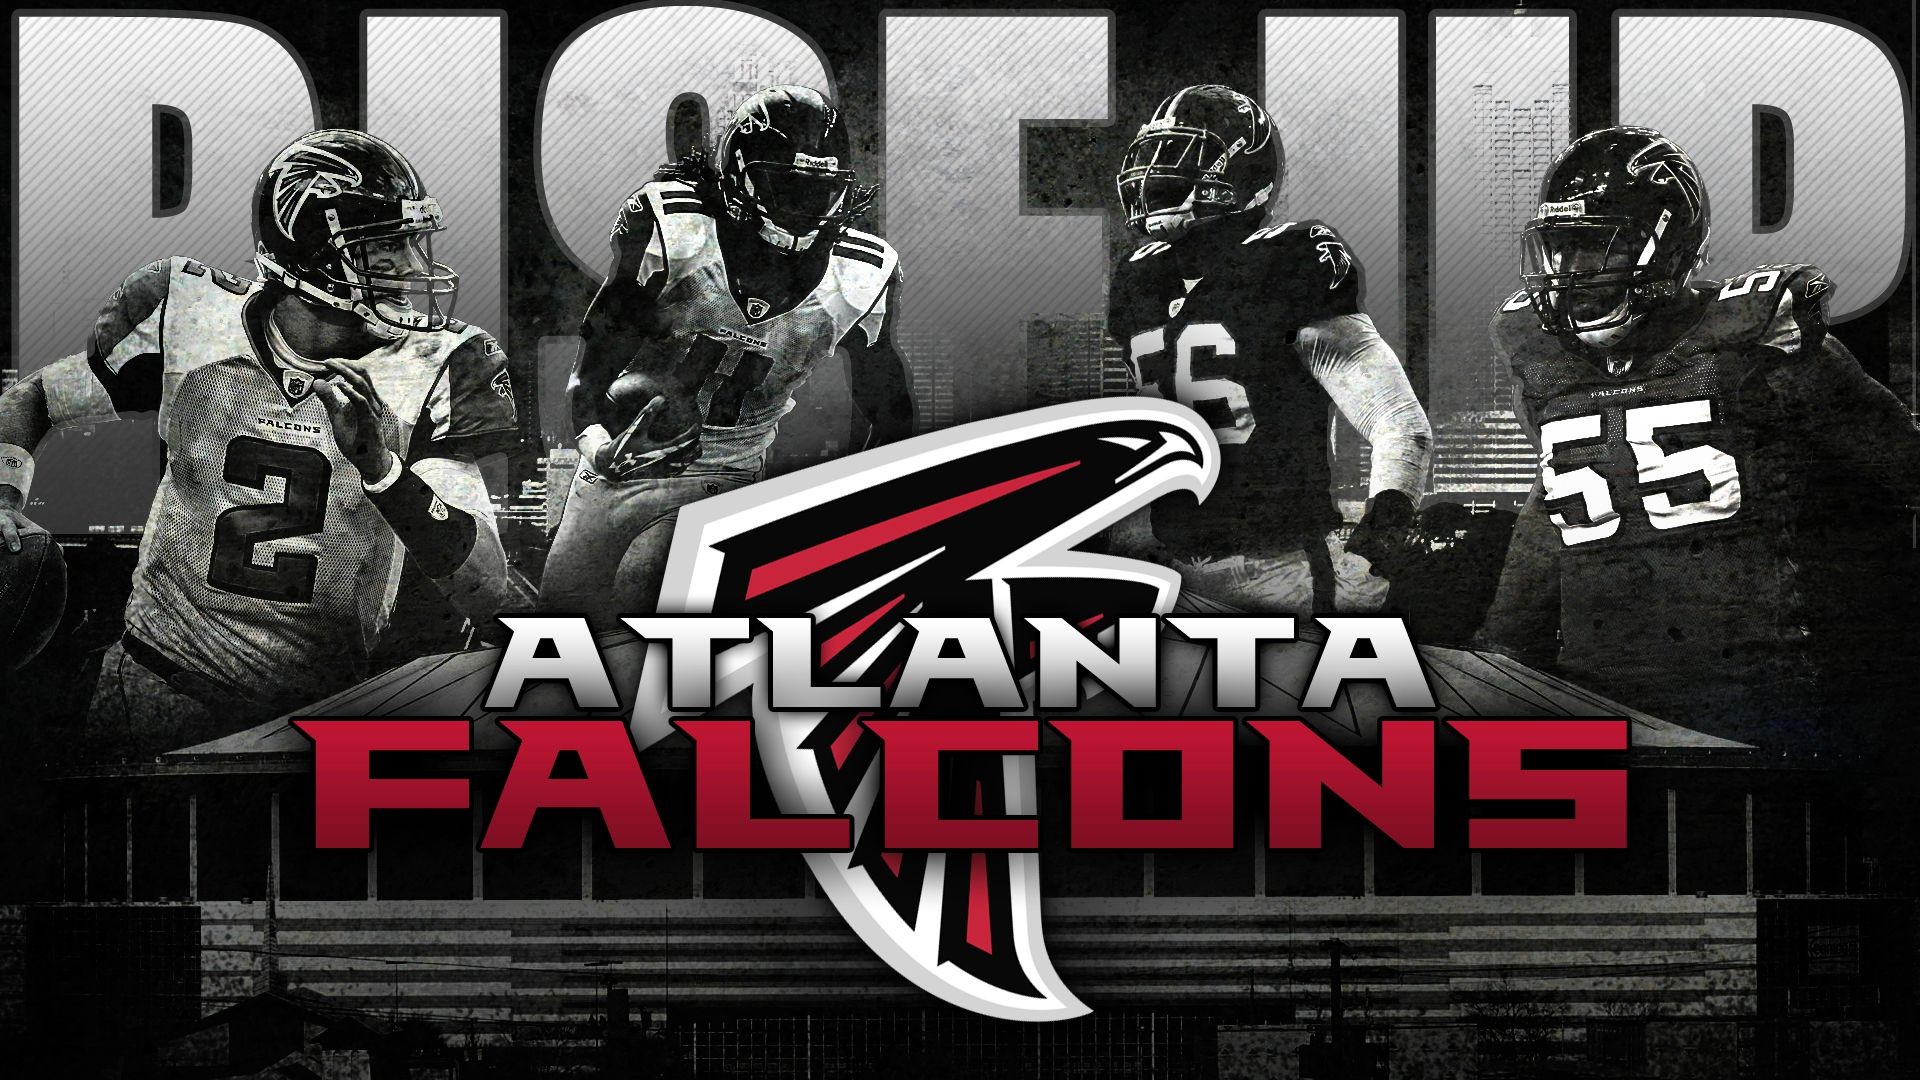 Atlanta Falcons For Desktop Wallpaper With Resolution 1920X1080